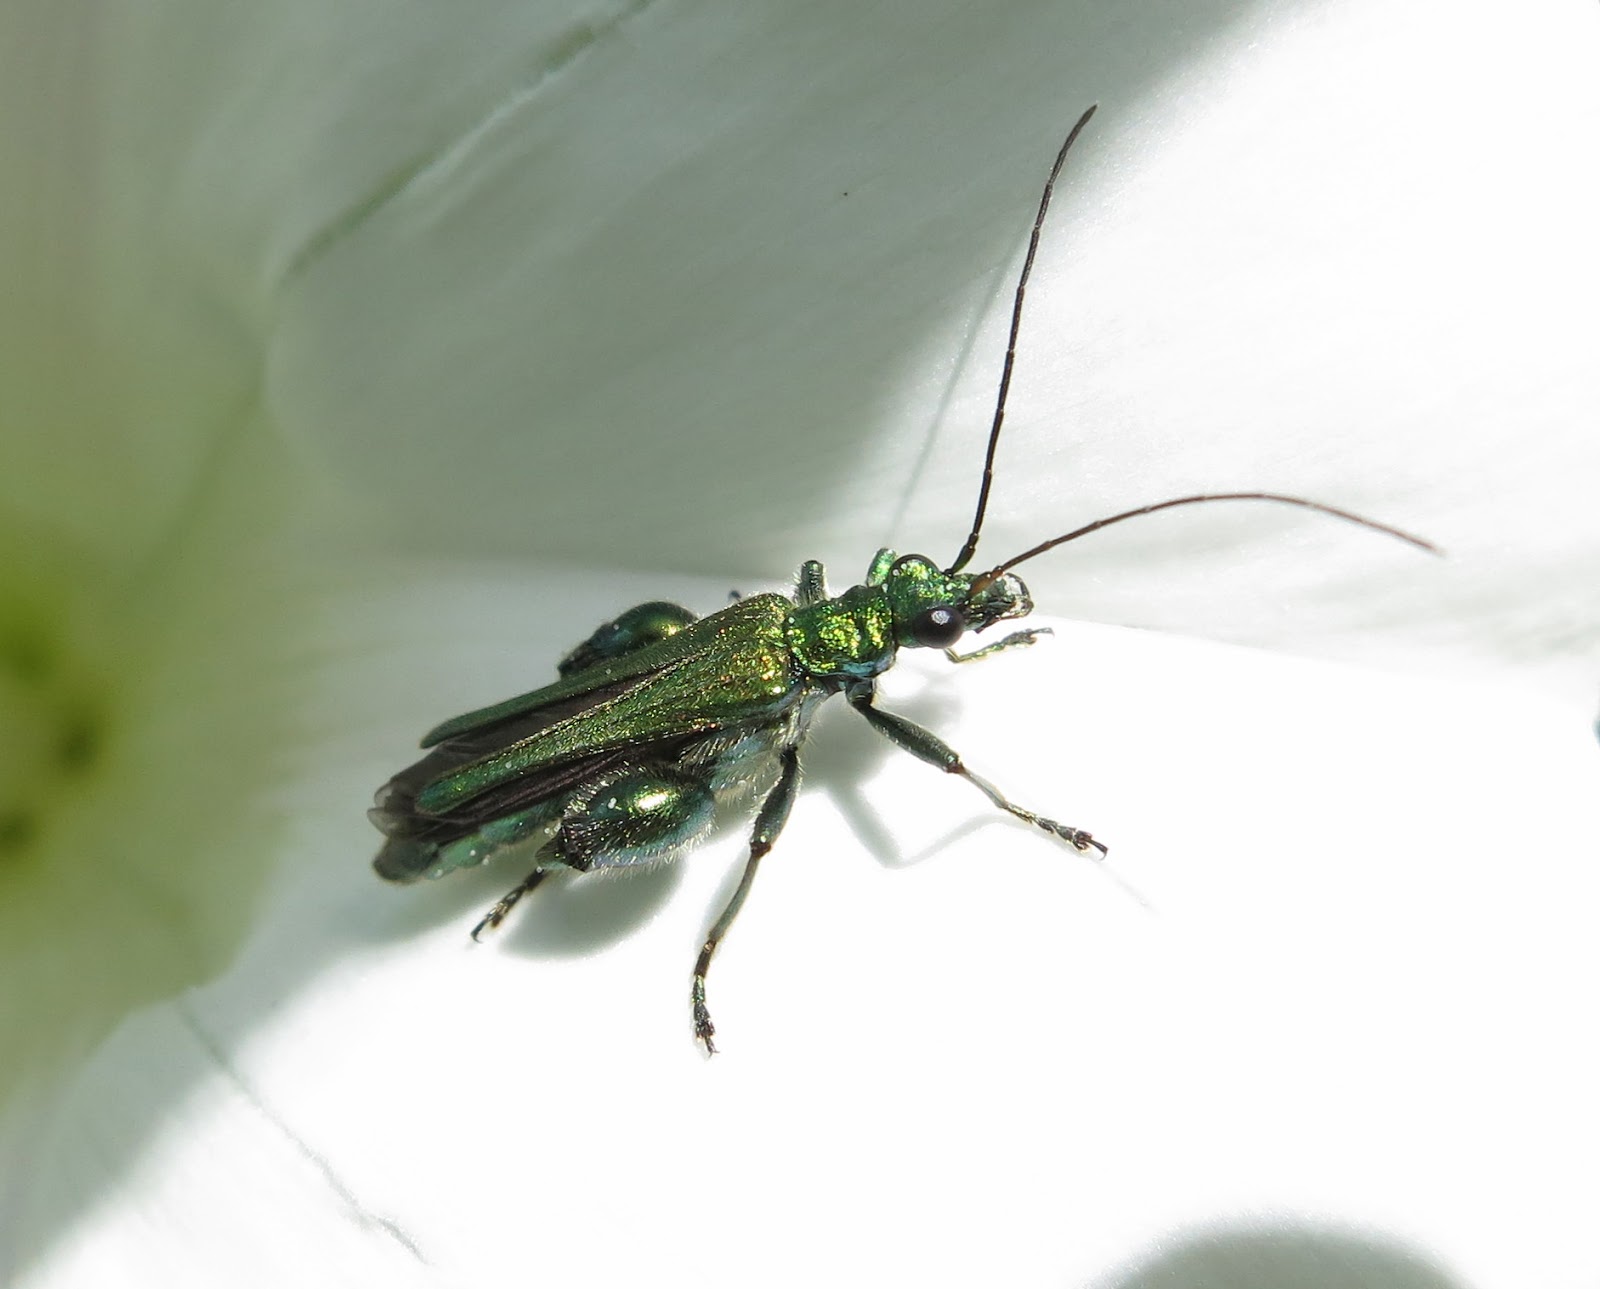 Swollen-thighed Beetle (Oedemera (Oedemera) nobilis) June 25th 2014 on convolvulus flower